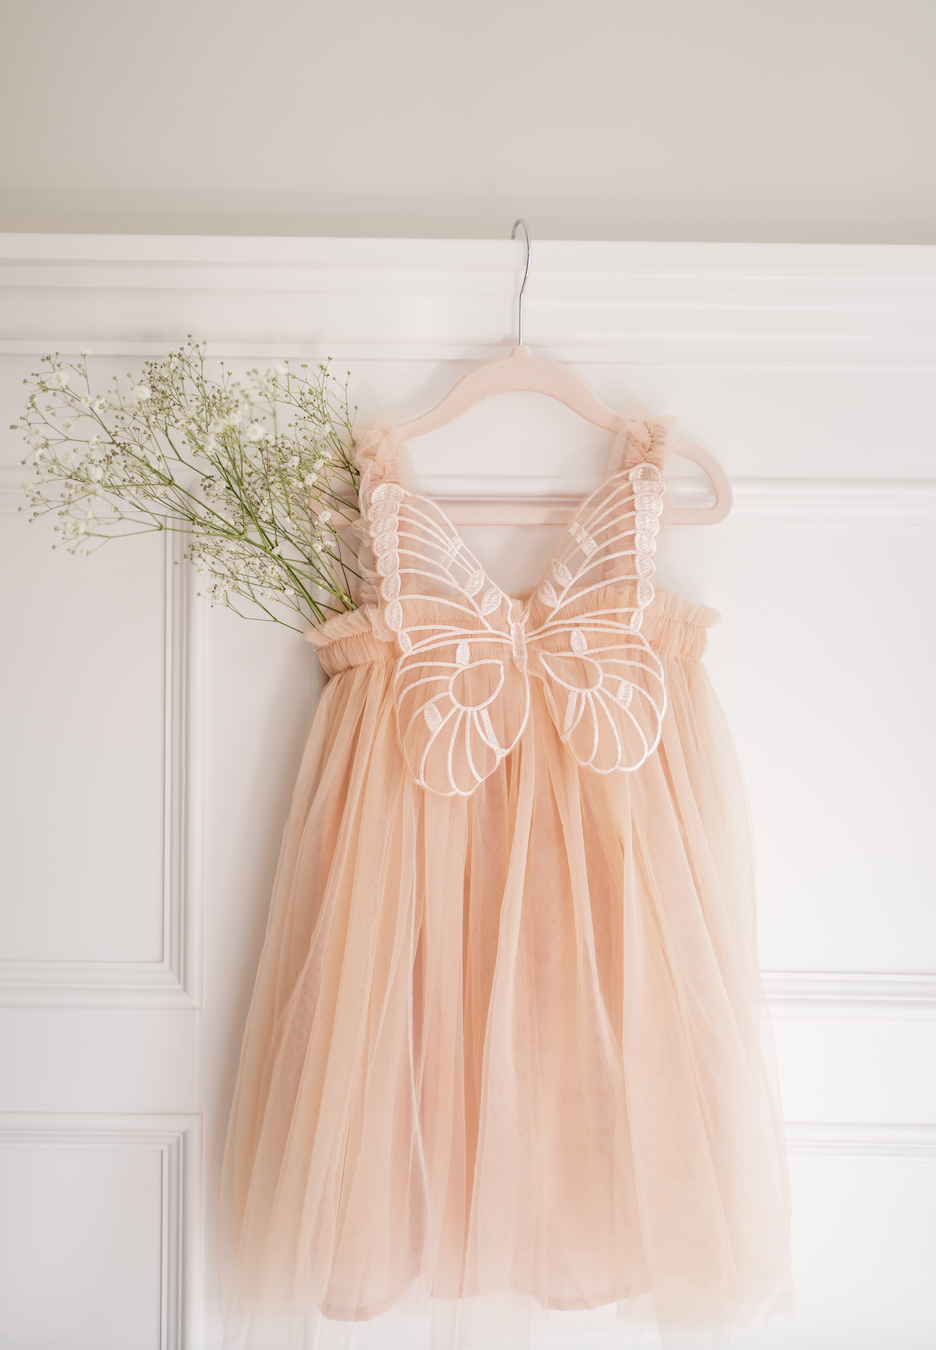 Butterfly Dream Dress - Champagne